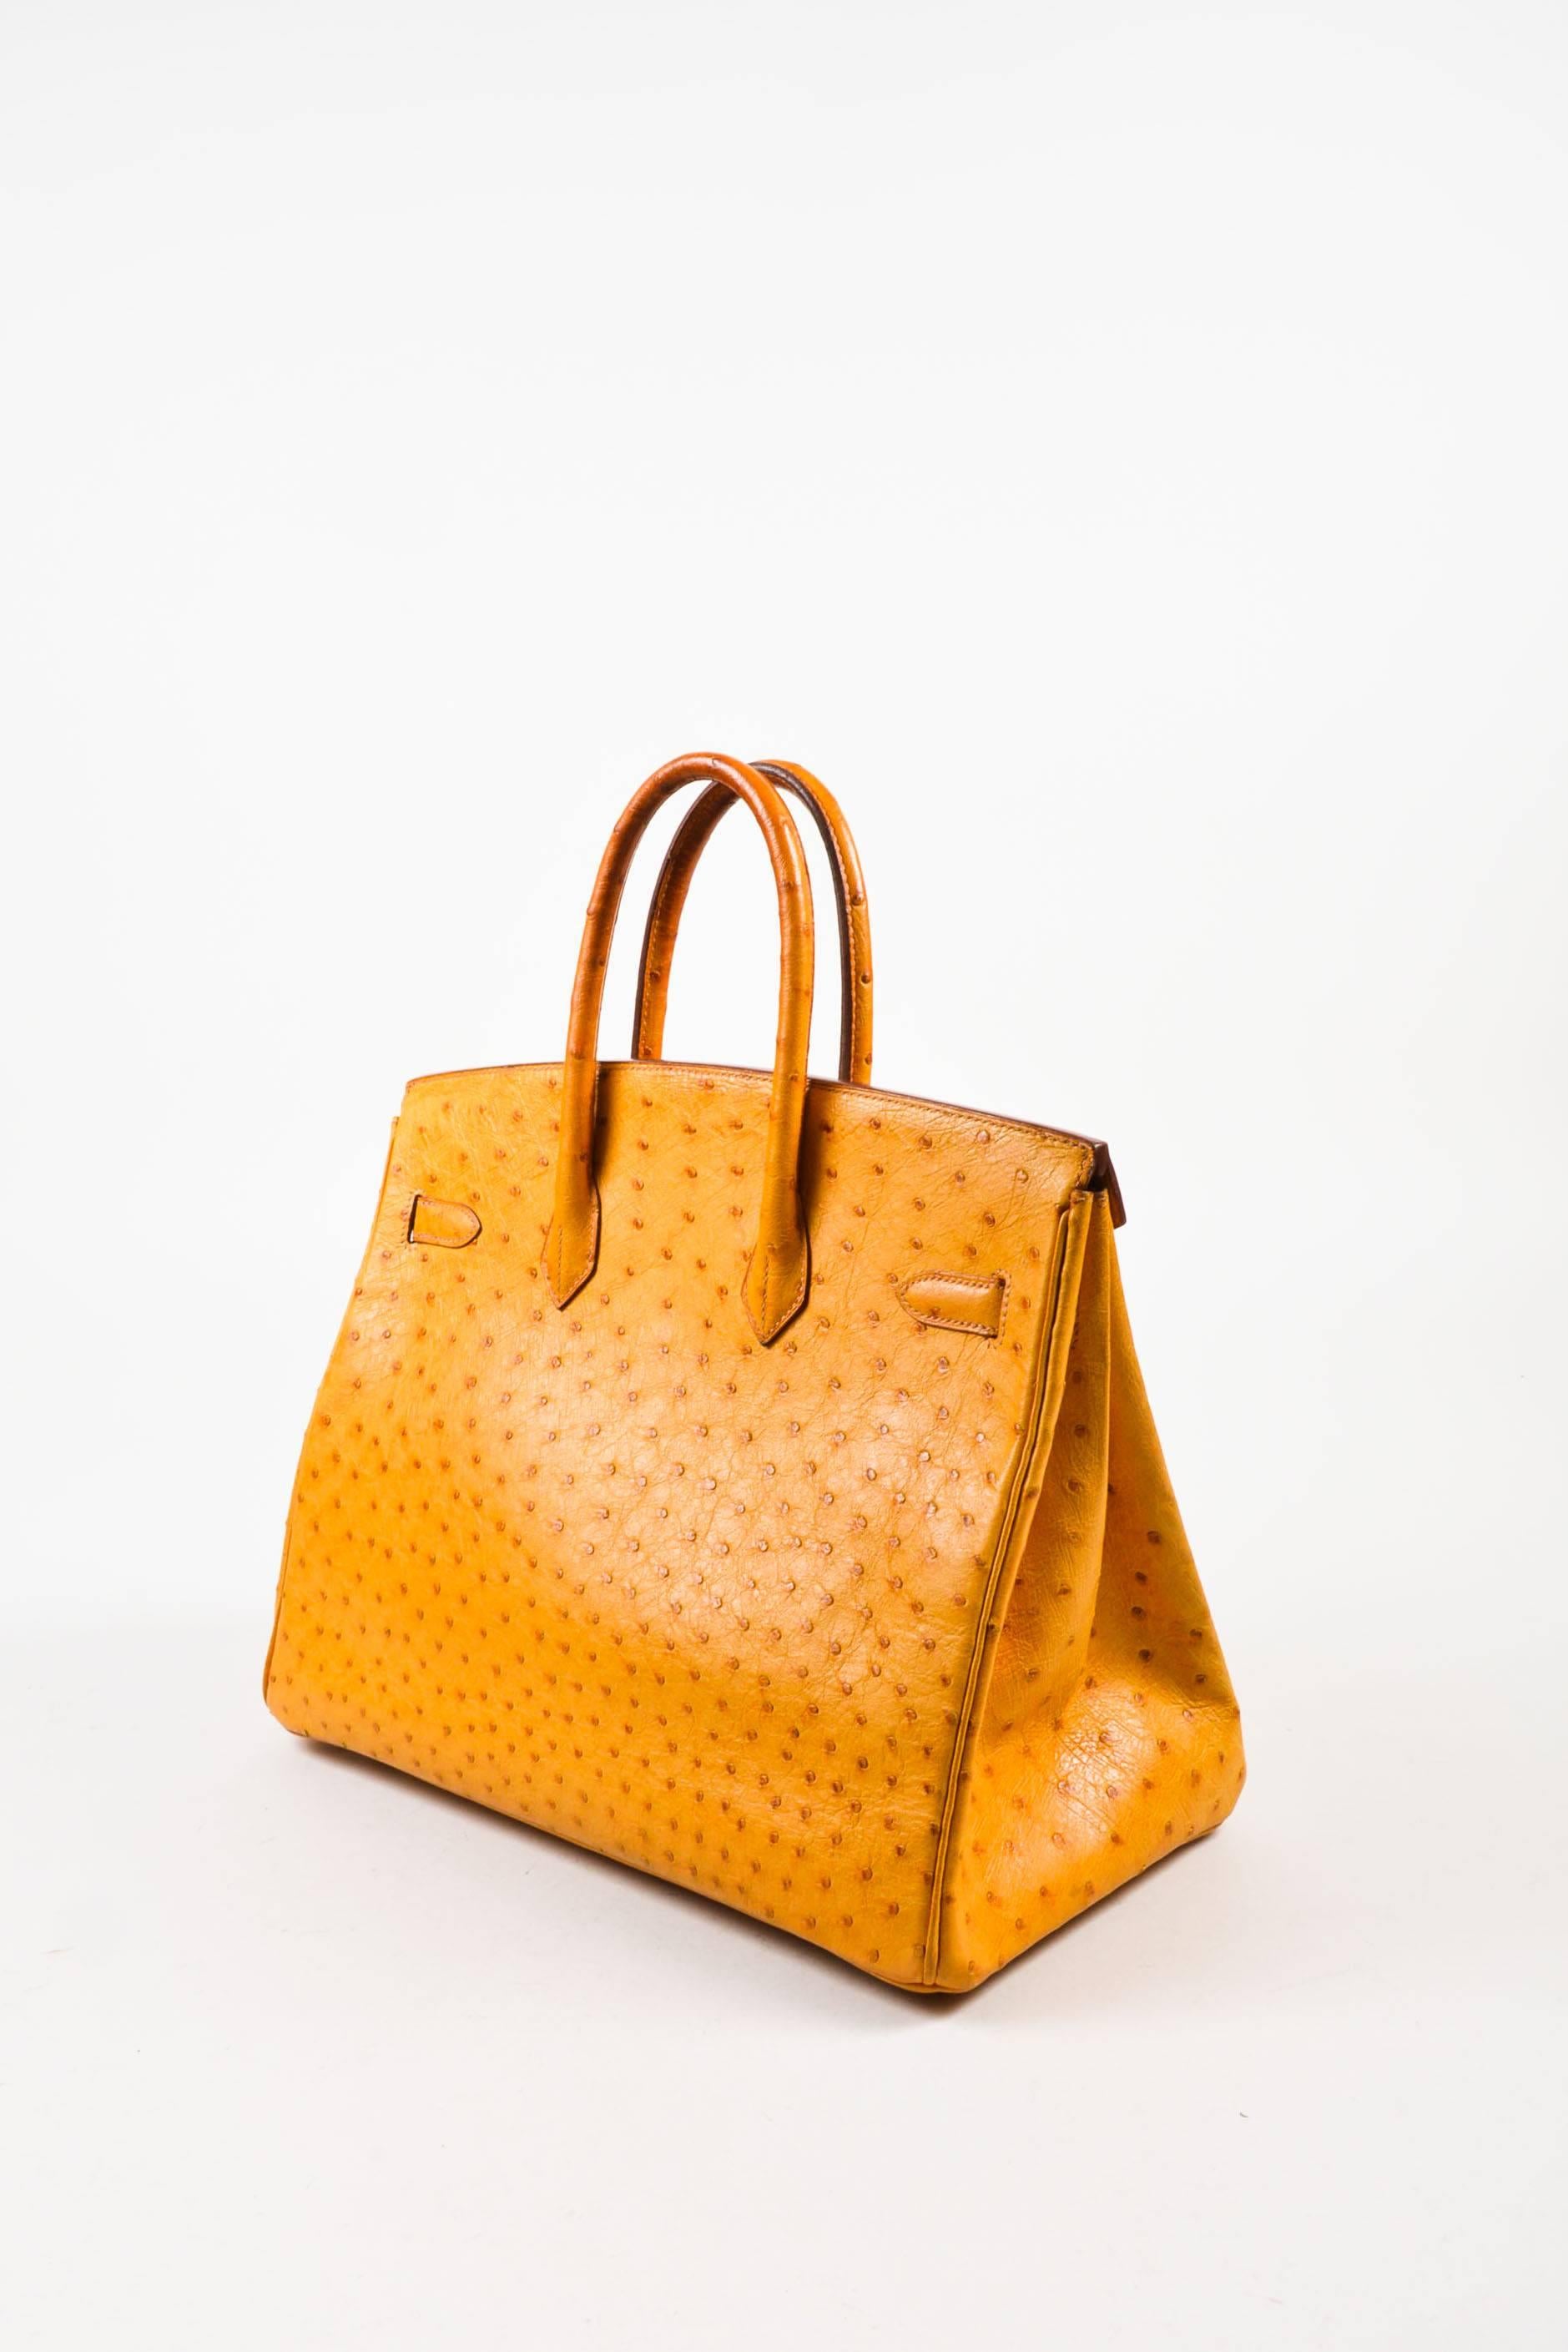 Comes in box and dust bag. This luxurious 35cm size Birkin handbag is a warm orange-tan 